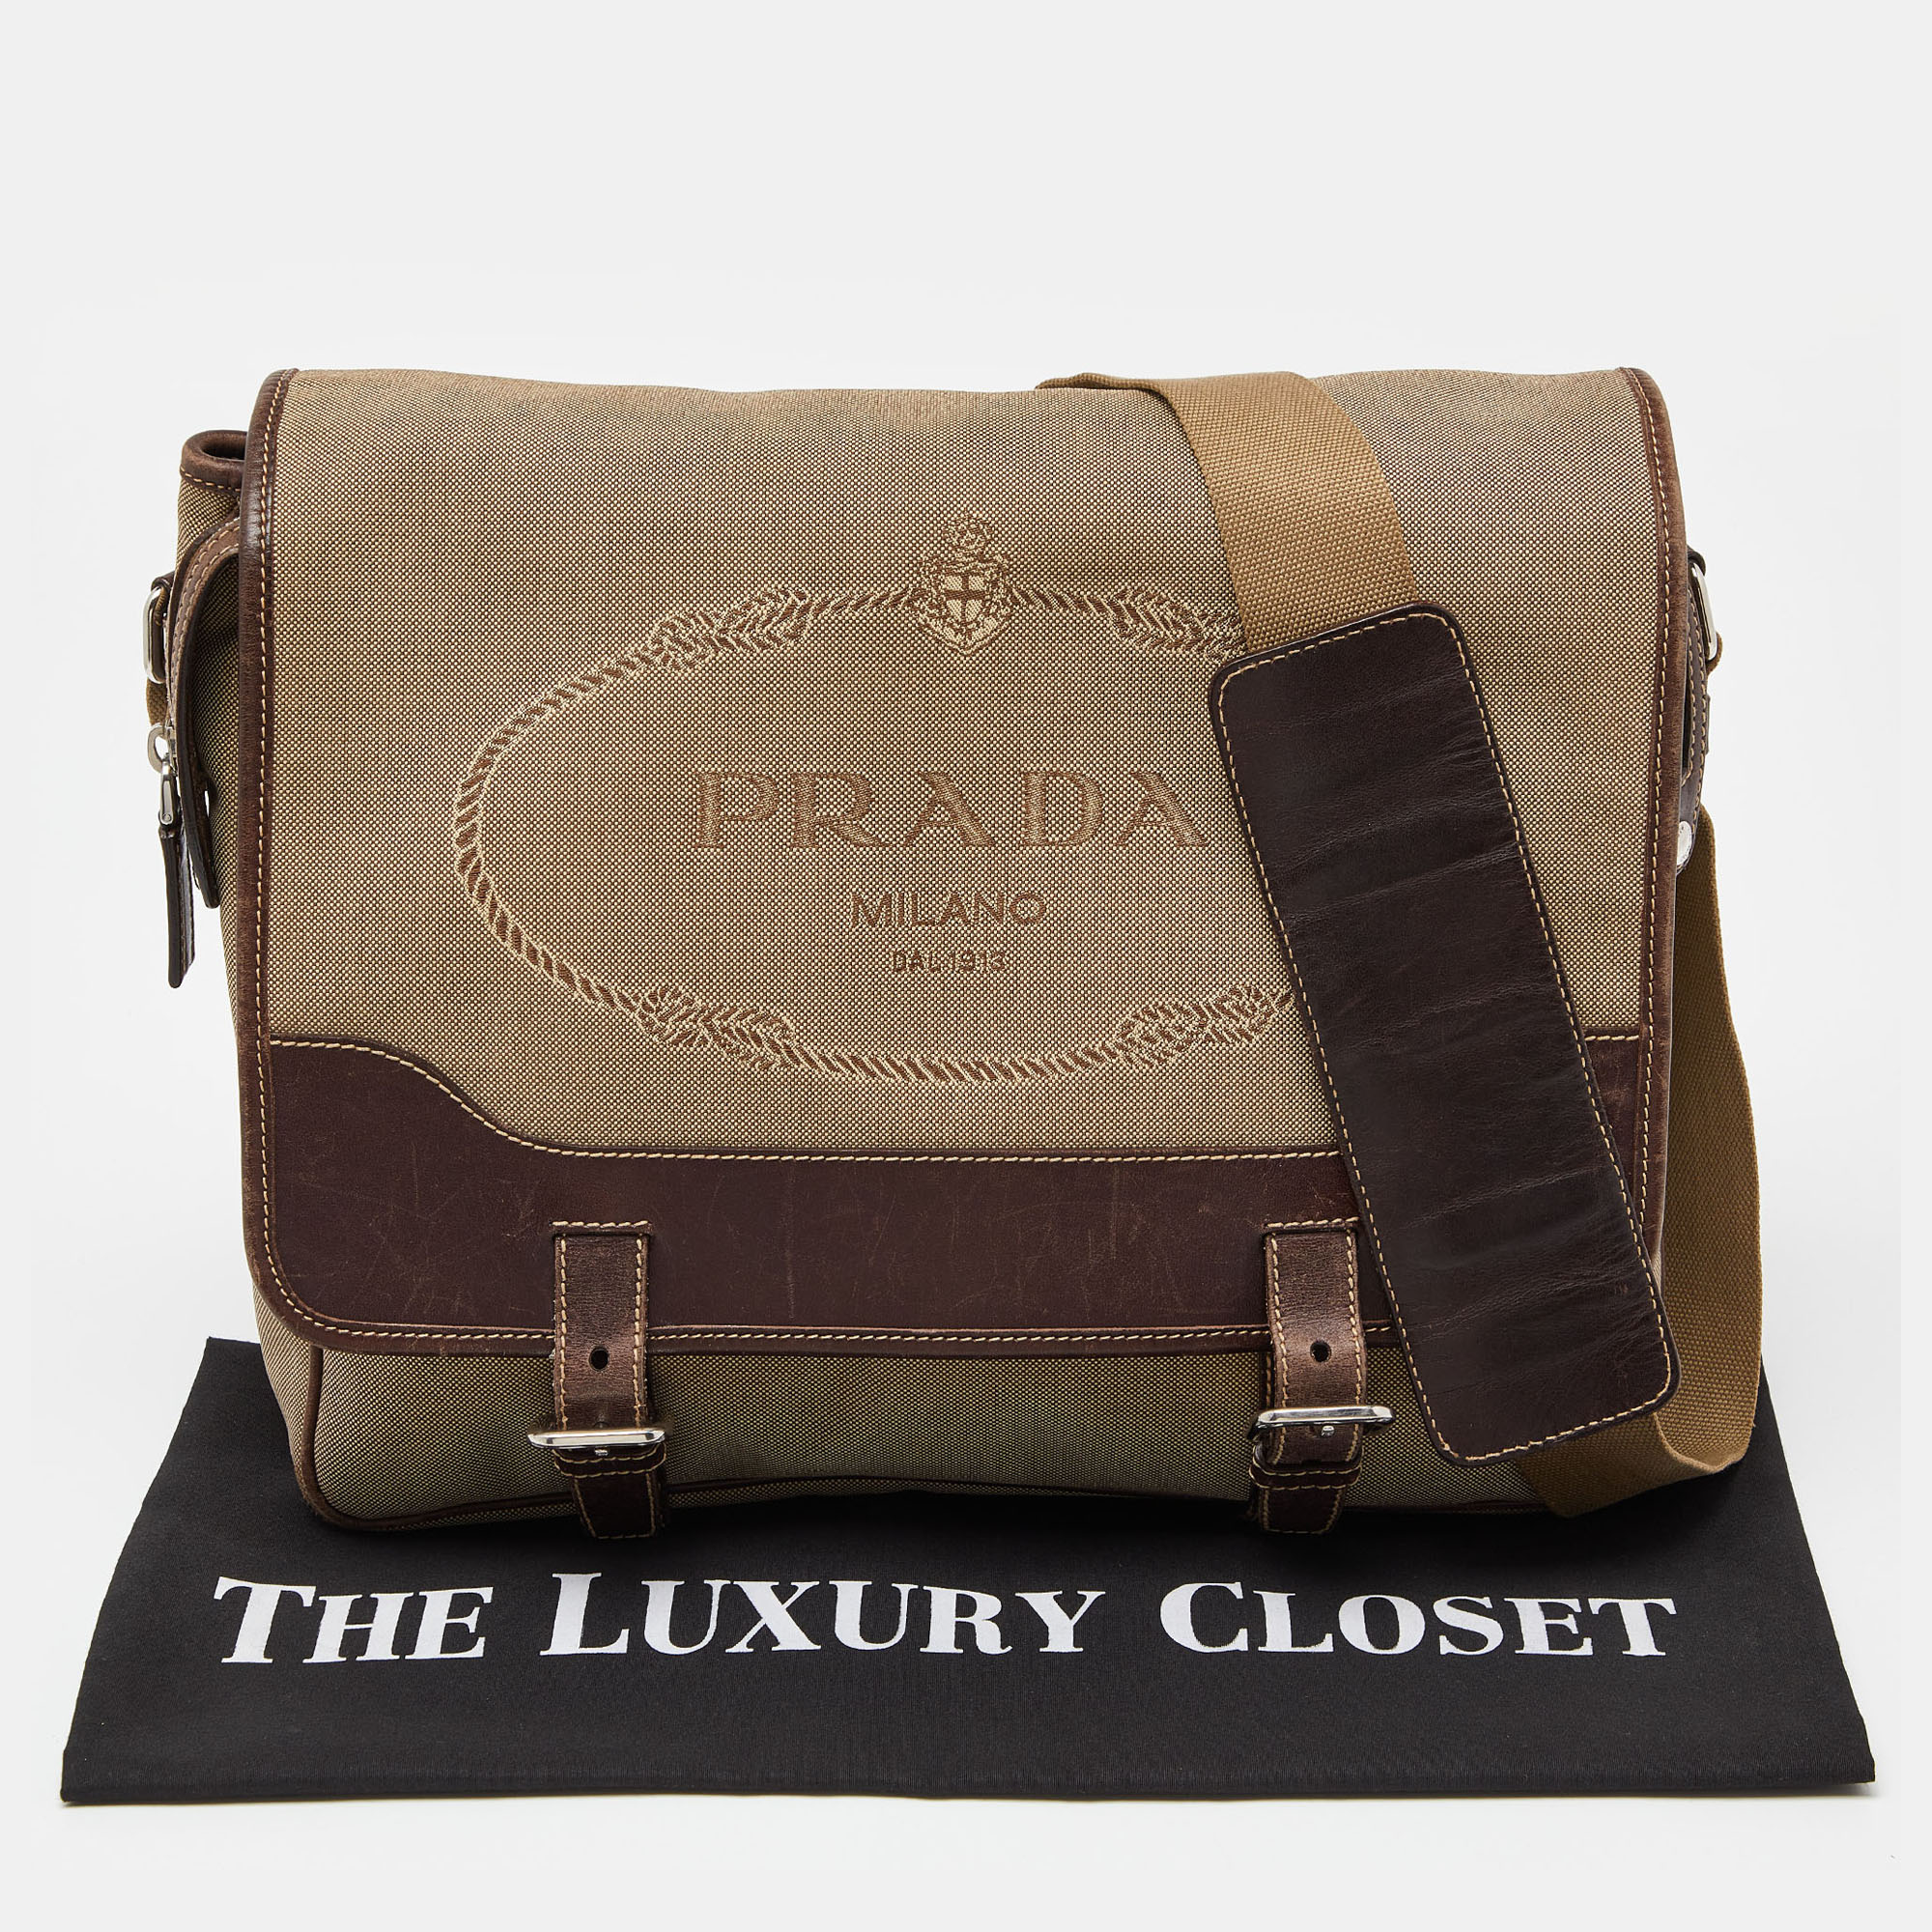 Prada Beige/Brown Jacquard Canvas And Leather Messenger Bag